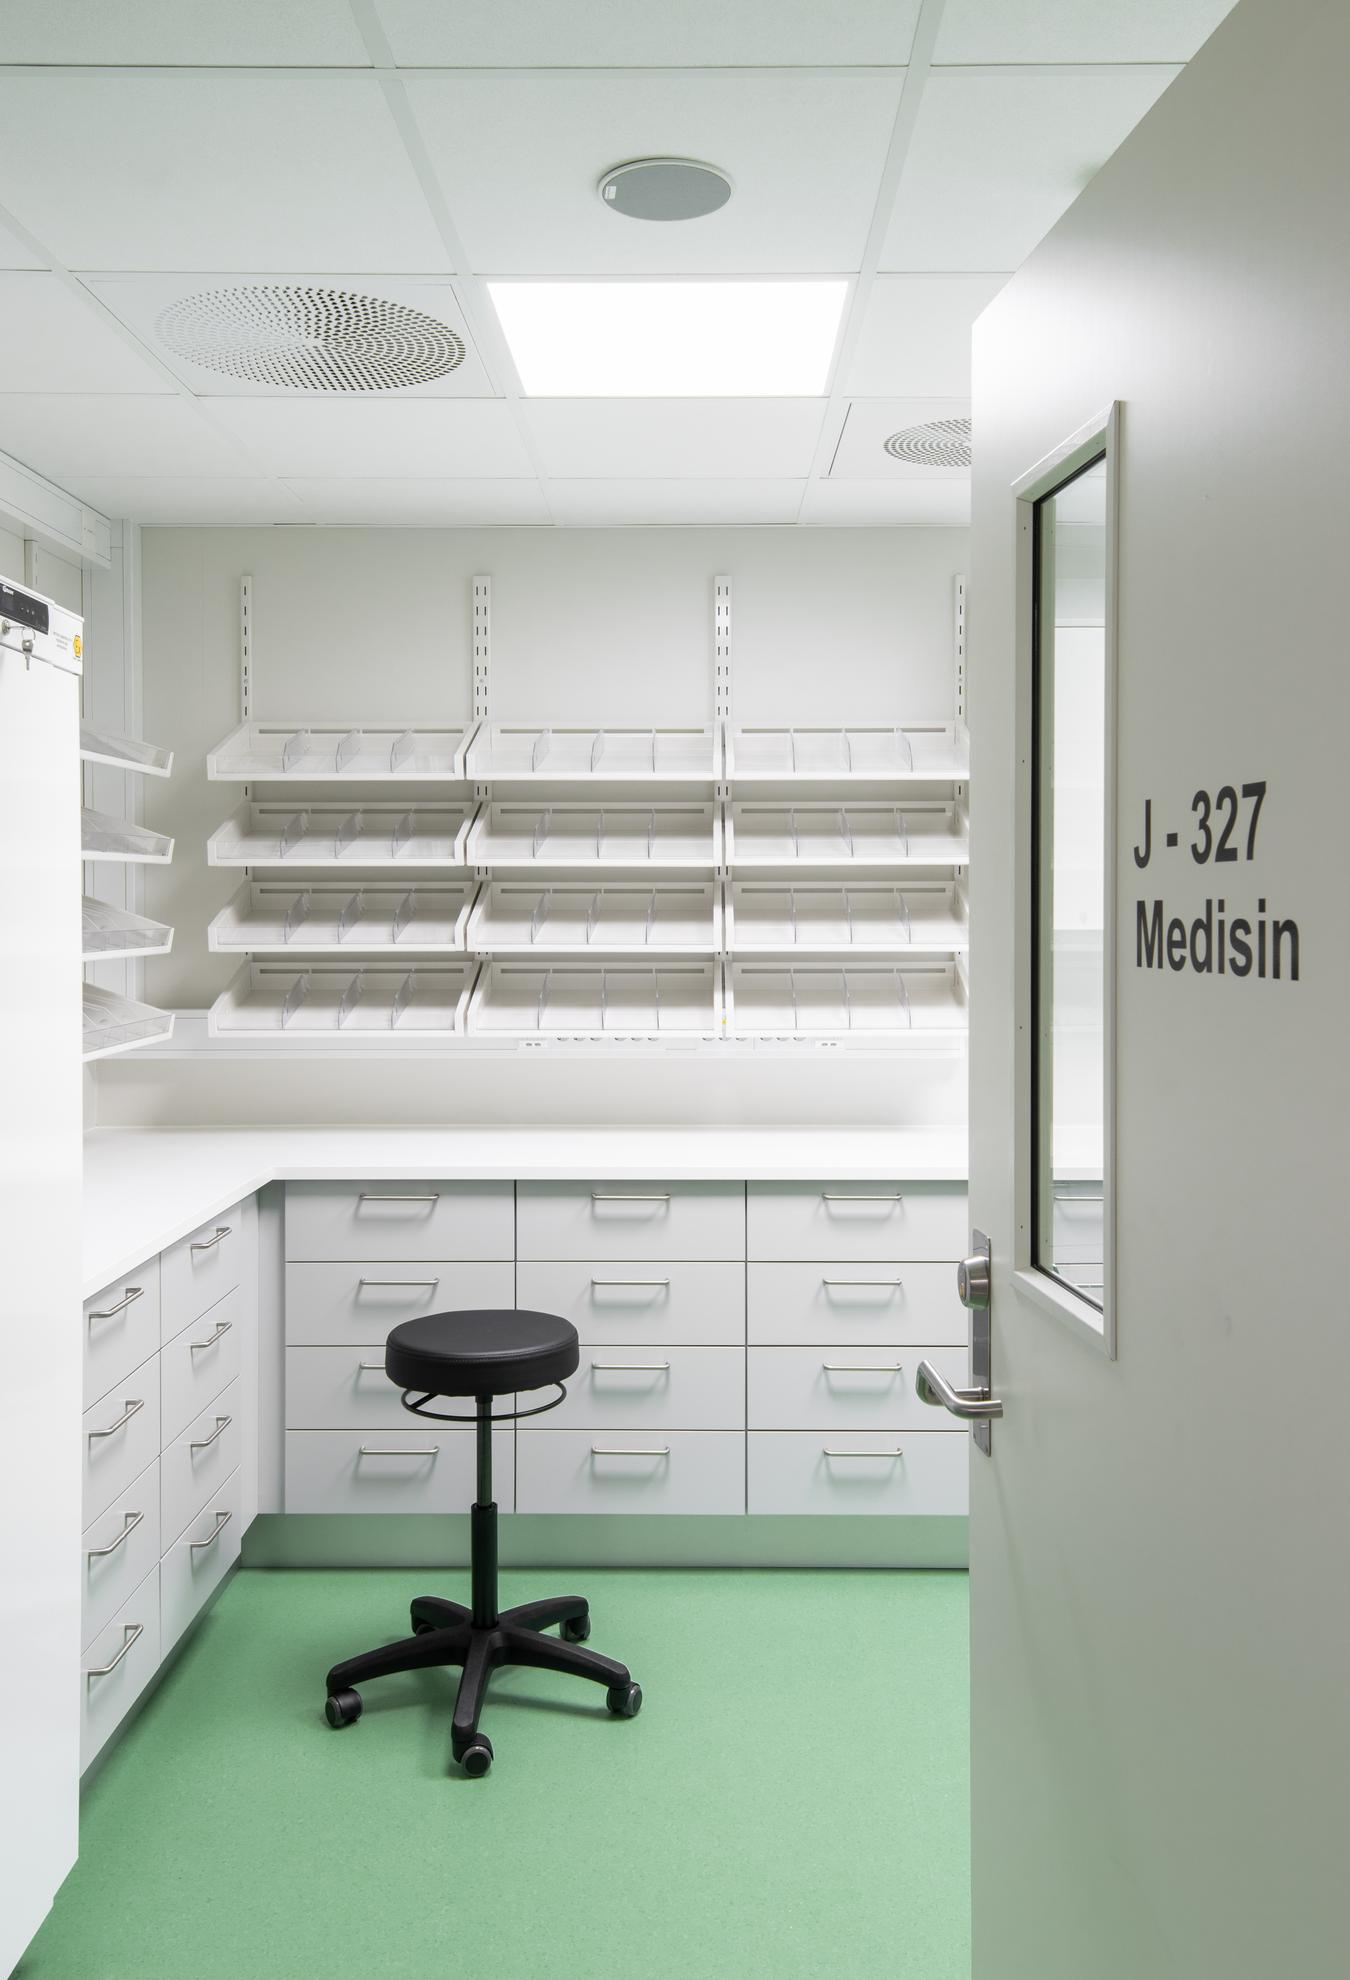 Medicine room with green floor. Photo